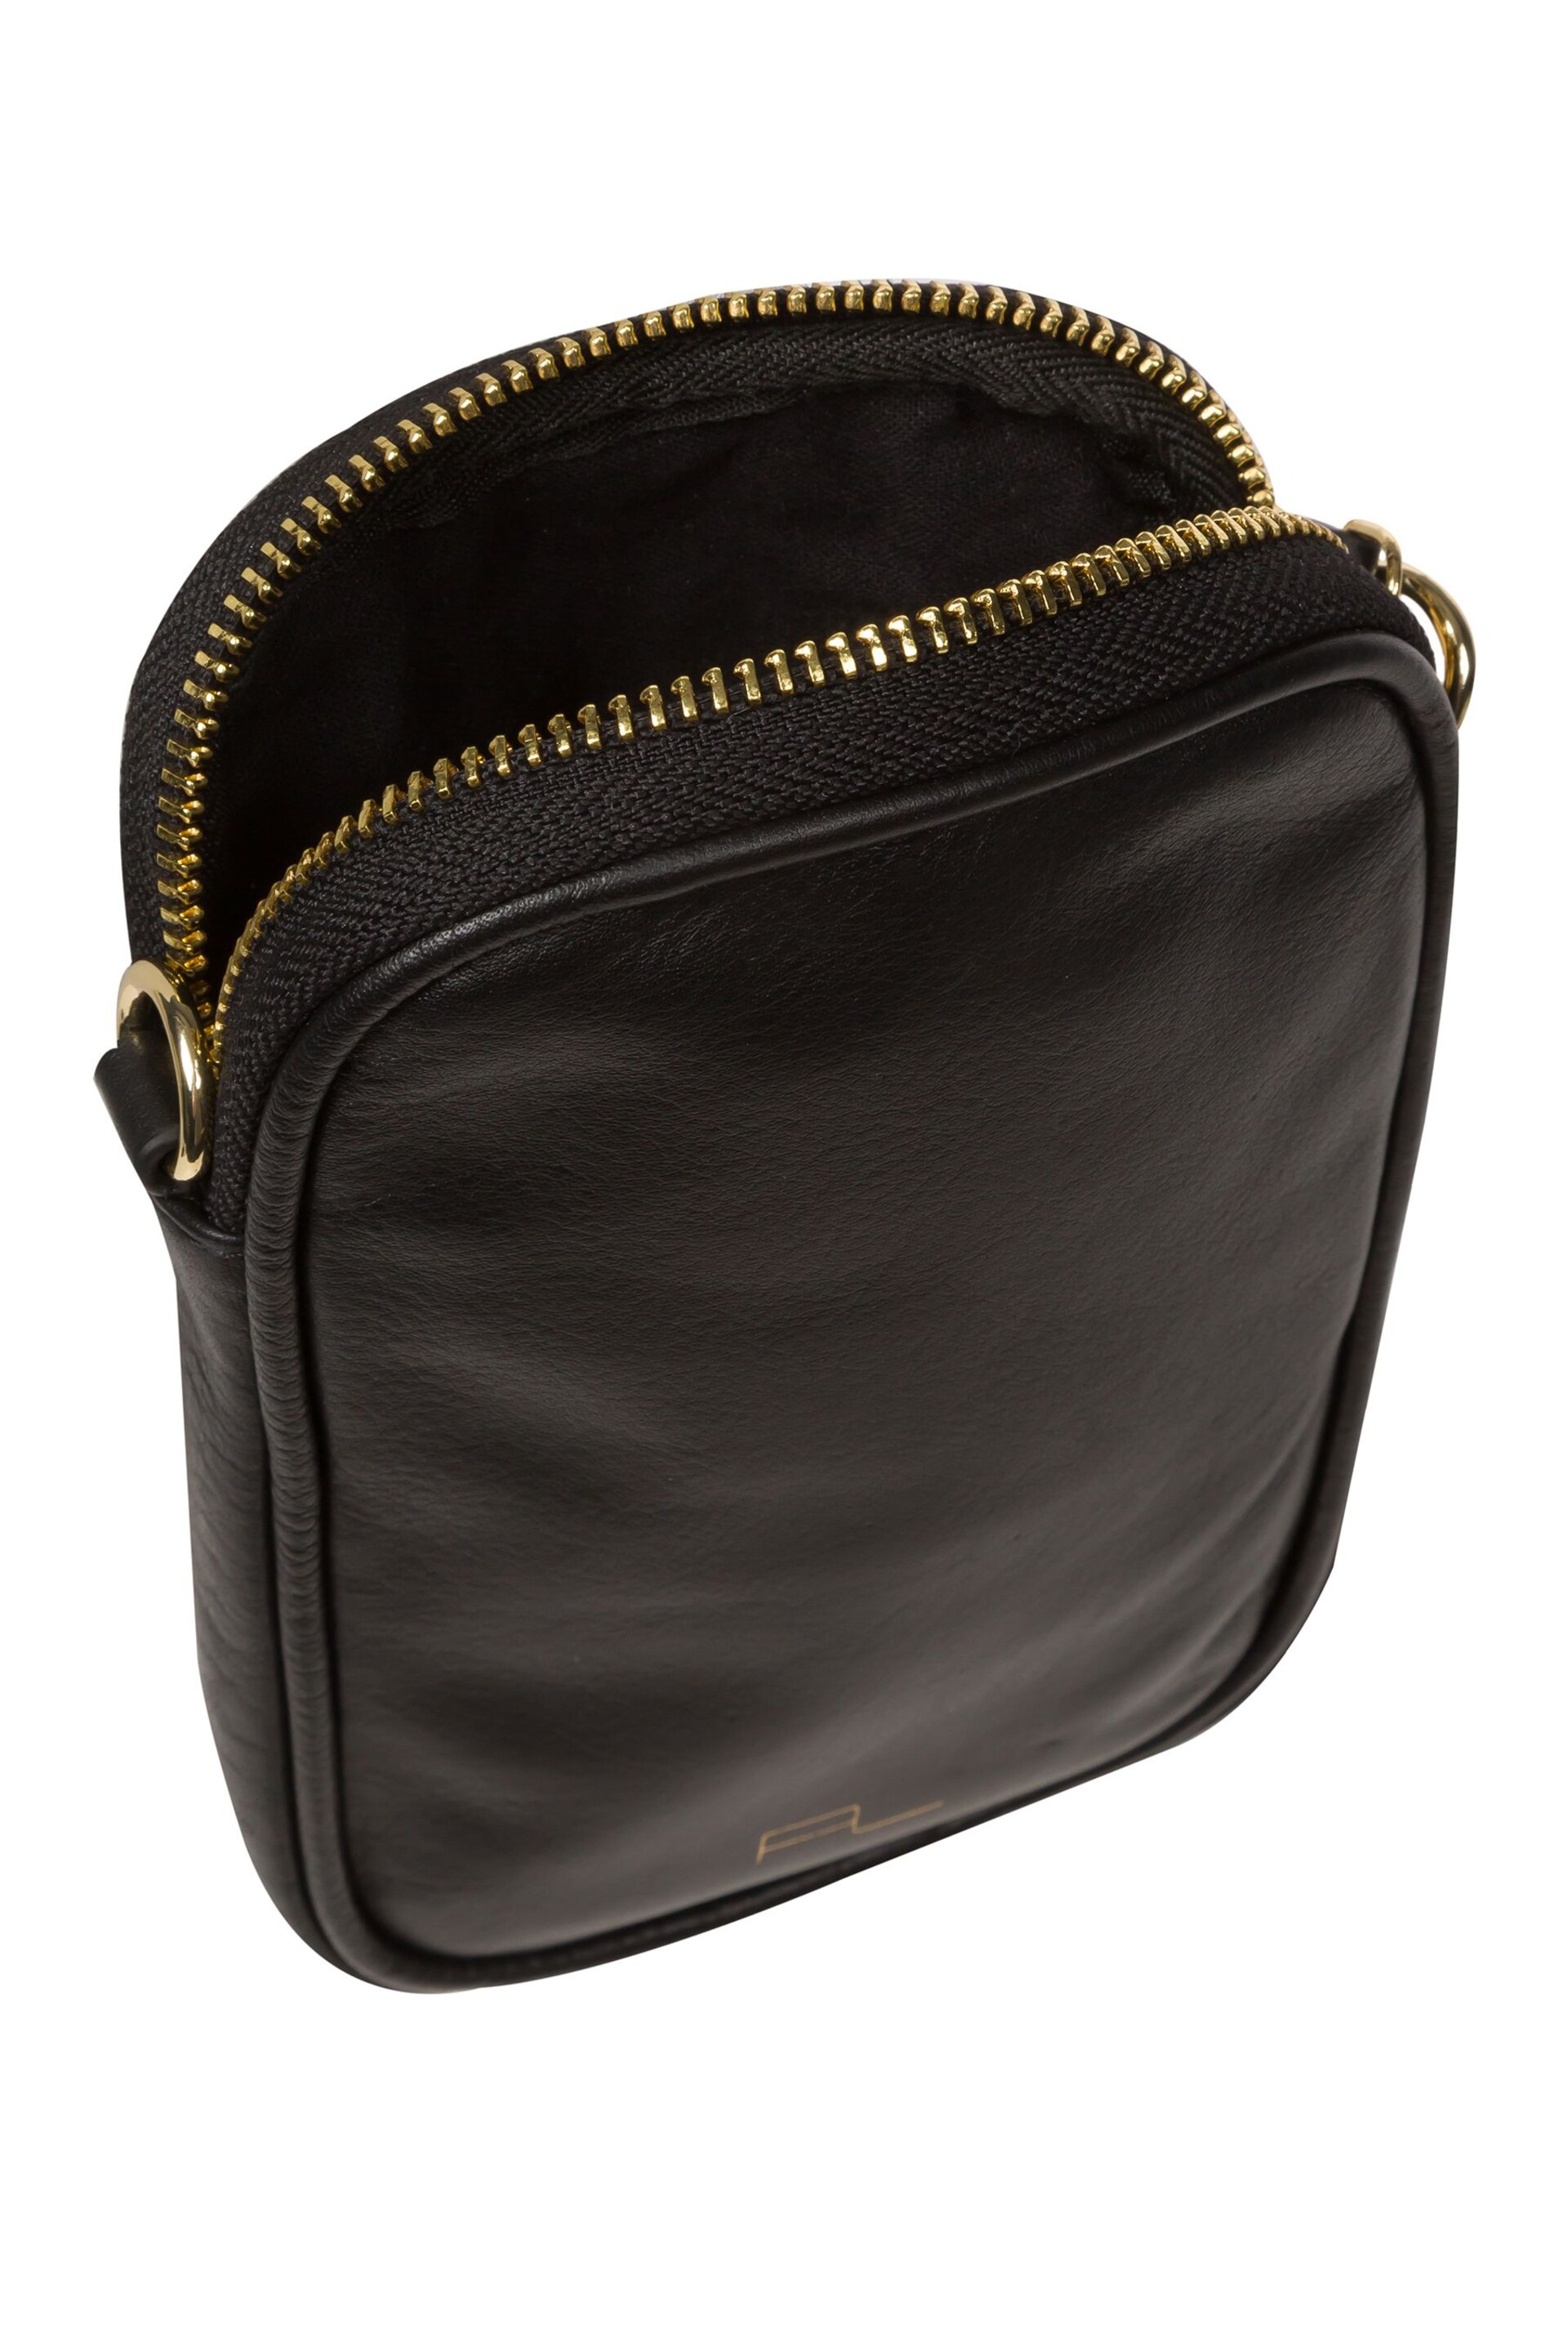 Pure Luxuries London Alaina Nappa Leather Cross-Body Phone Bag - Image 6 of 7